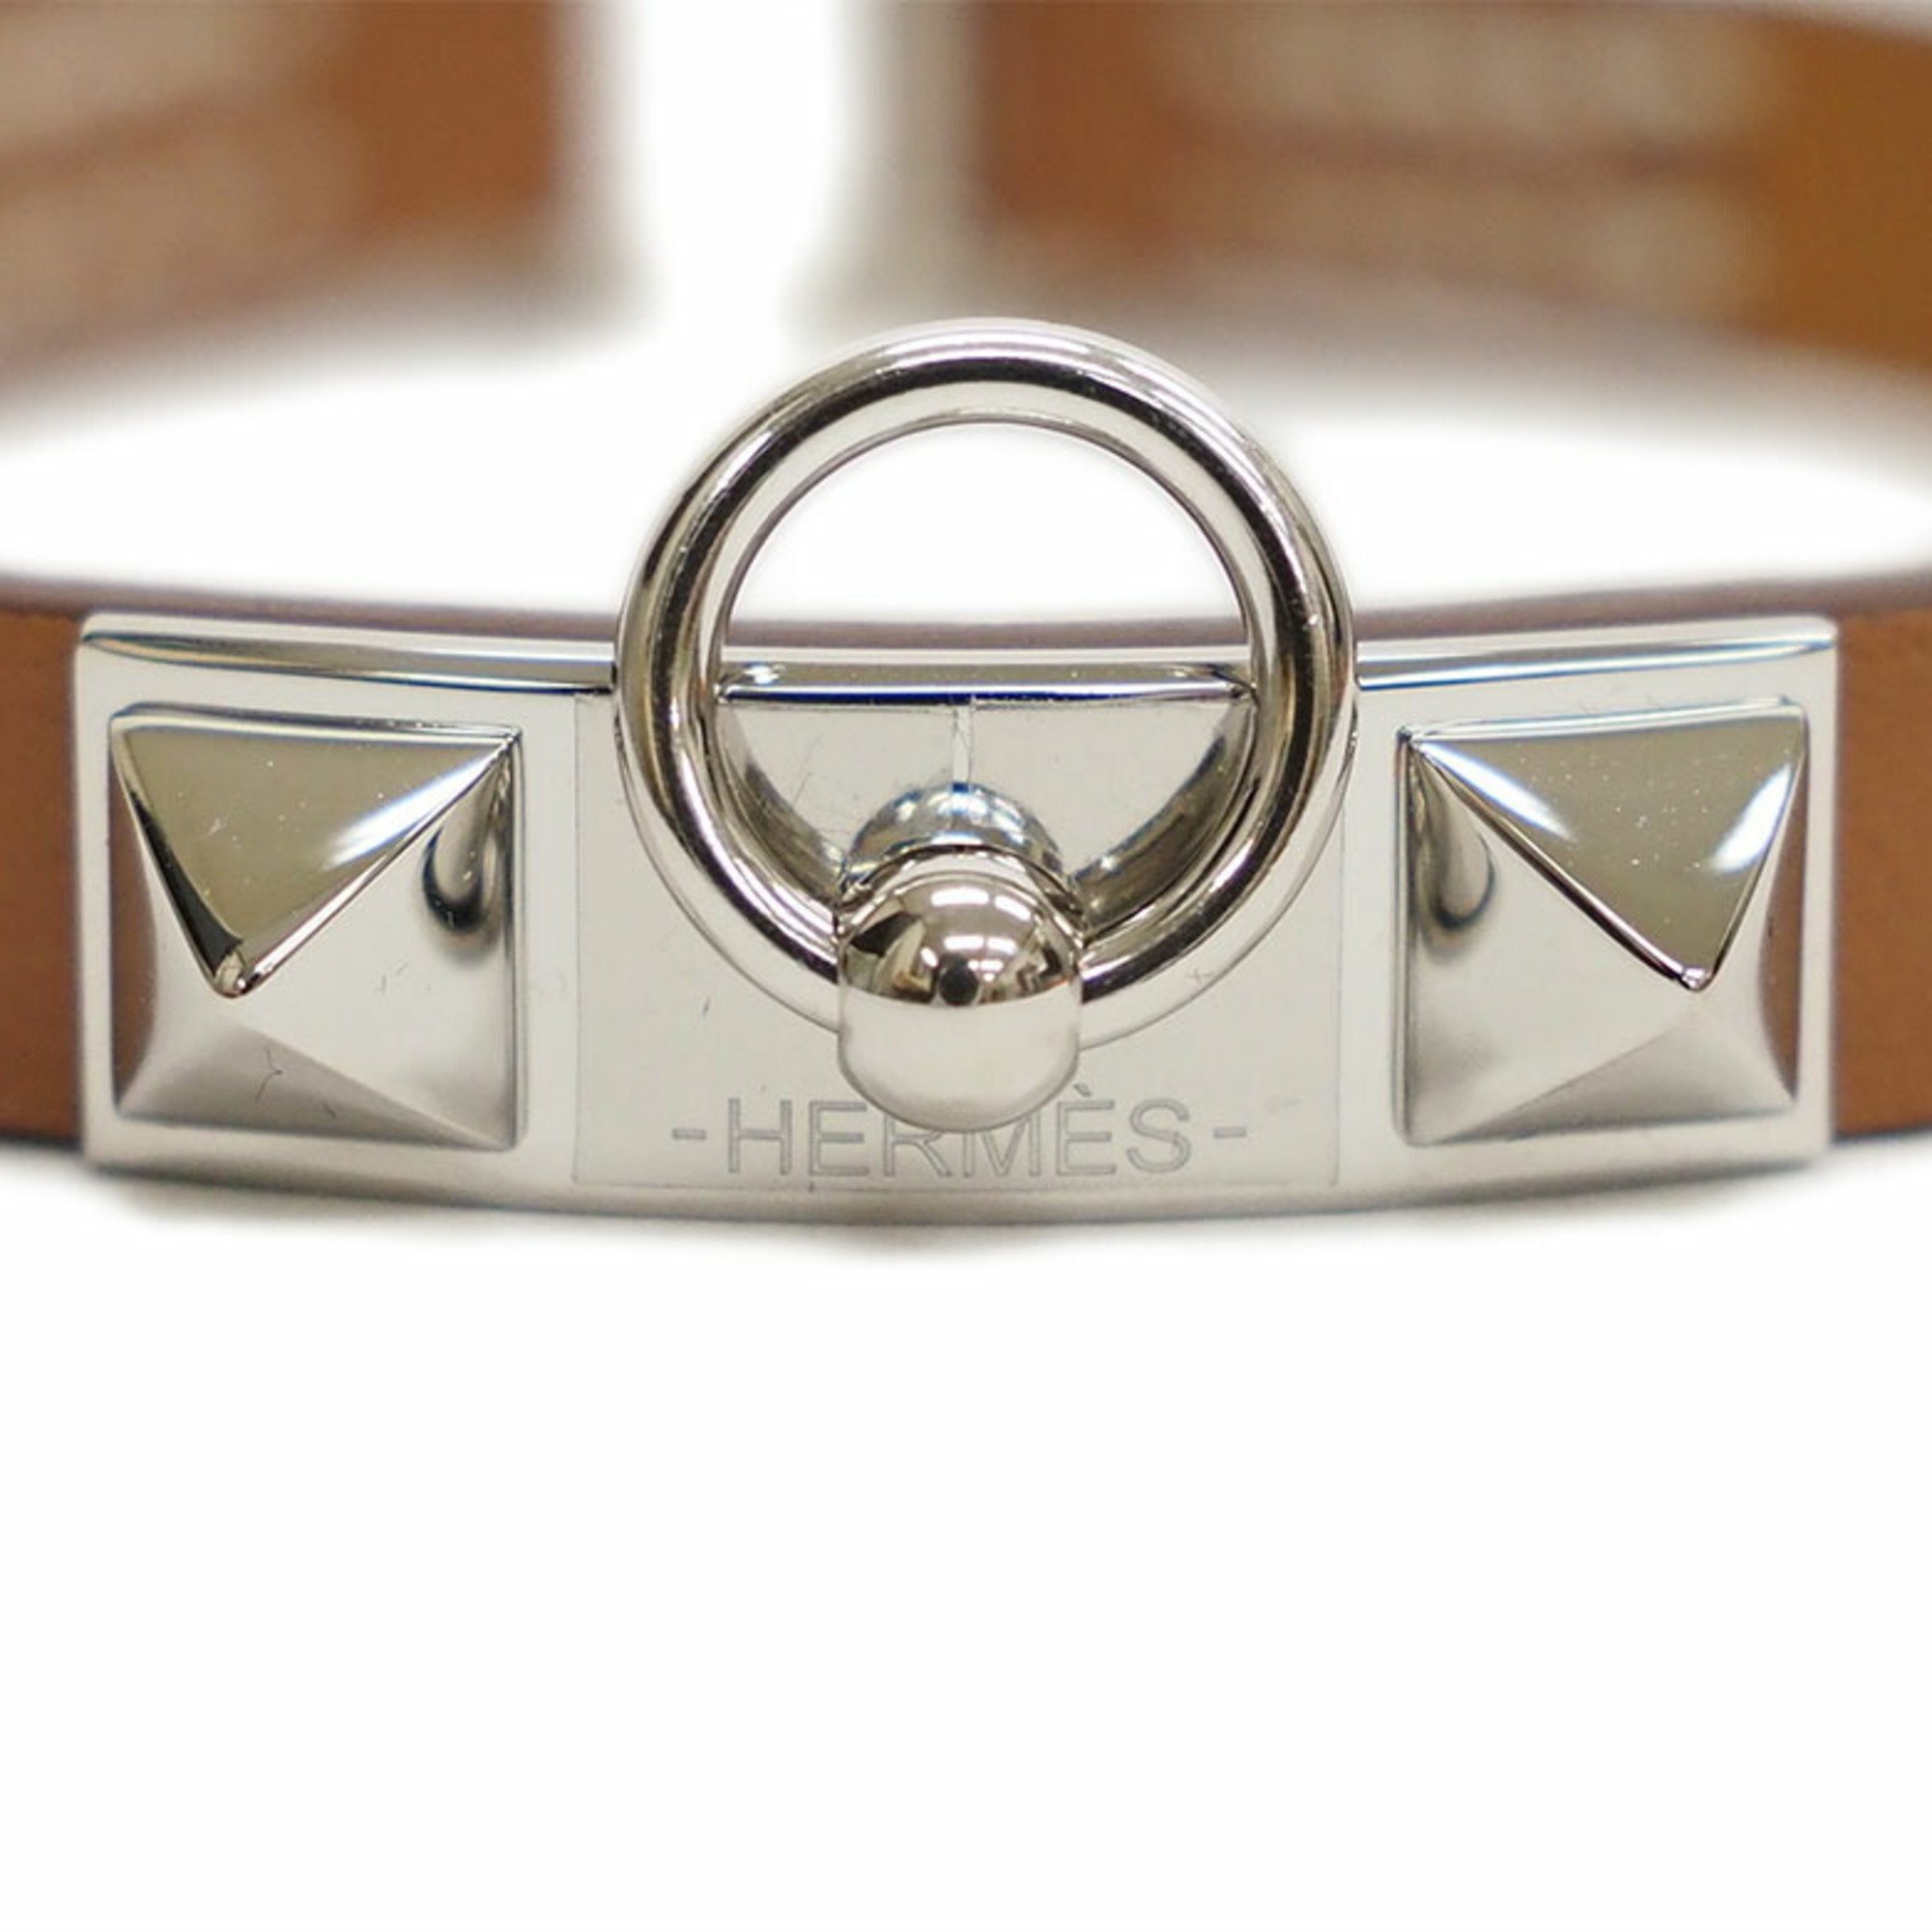 Hermes HERMES Leather Bracelet Rival Mini Gold H081181CK37 Size T3 Ladies